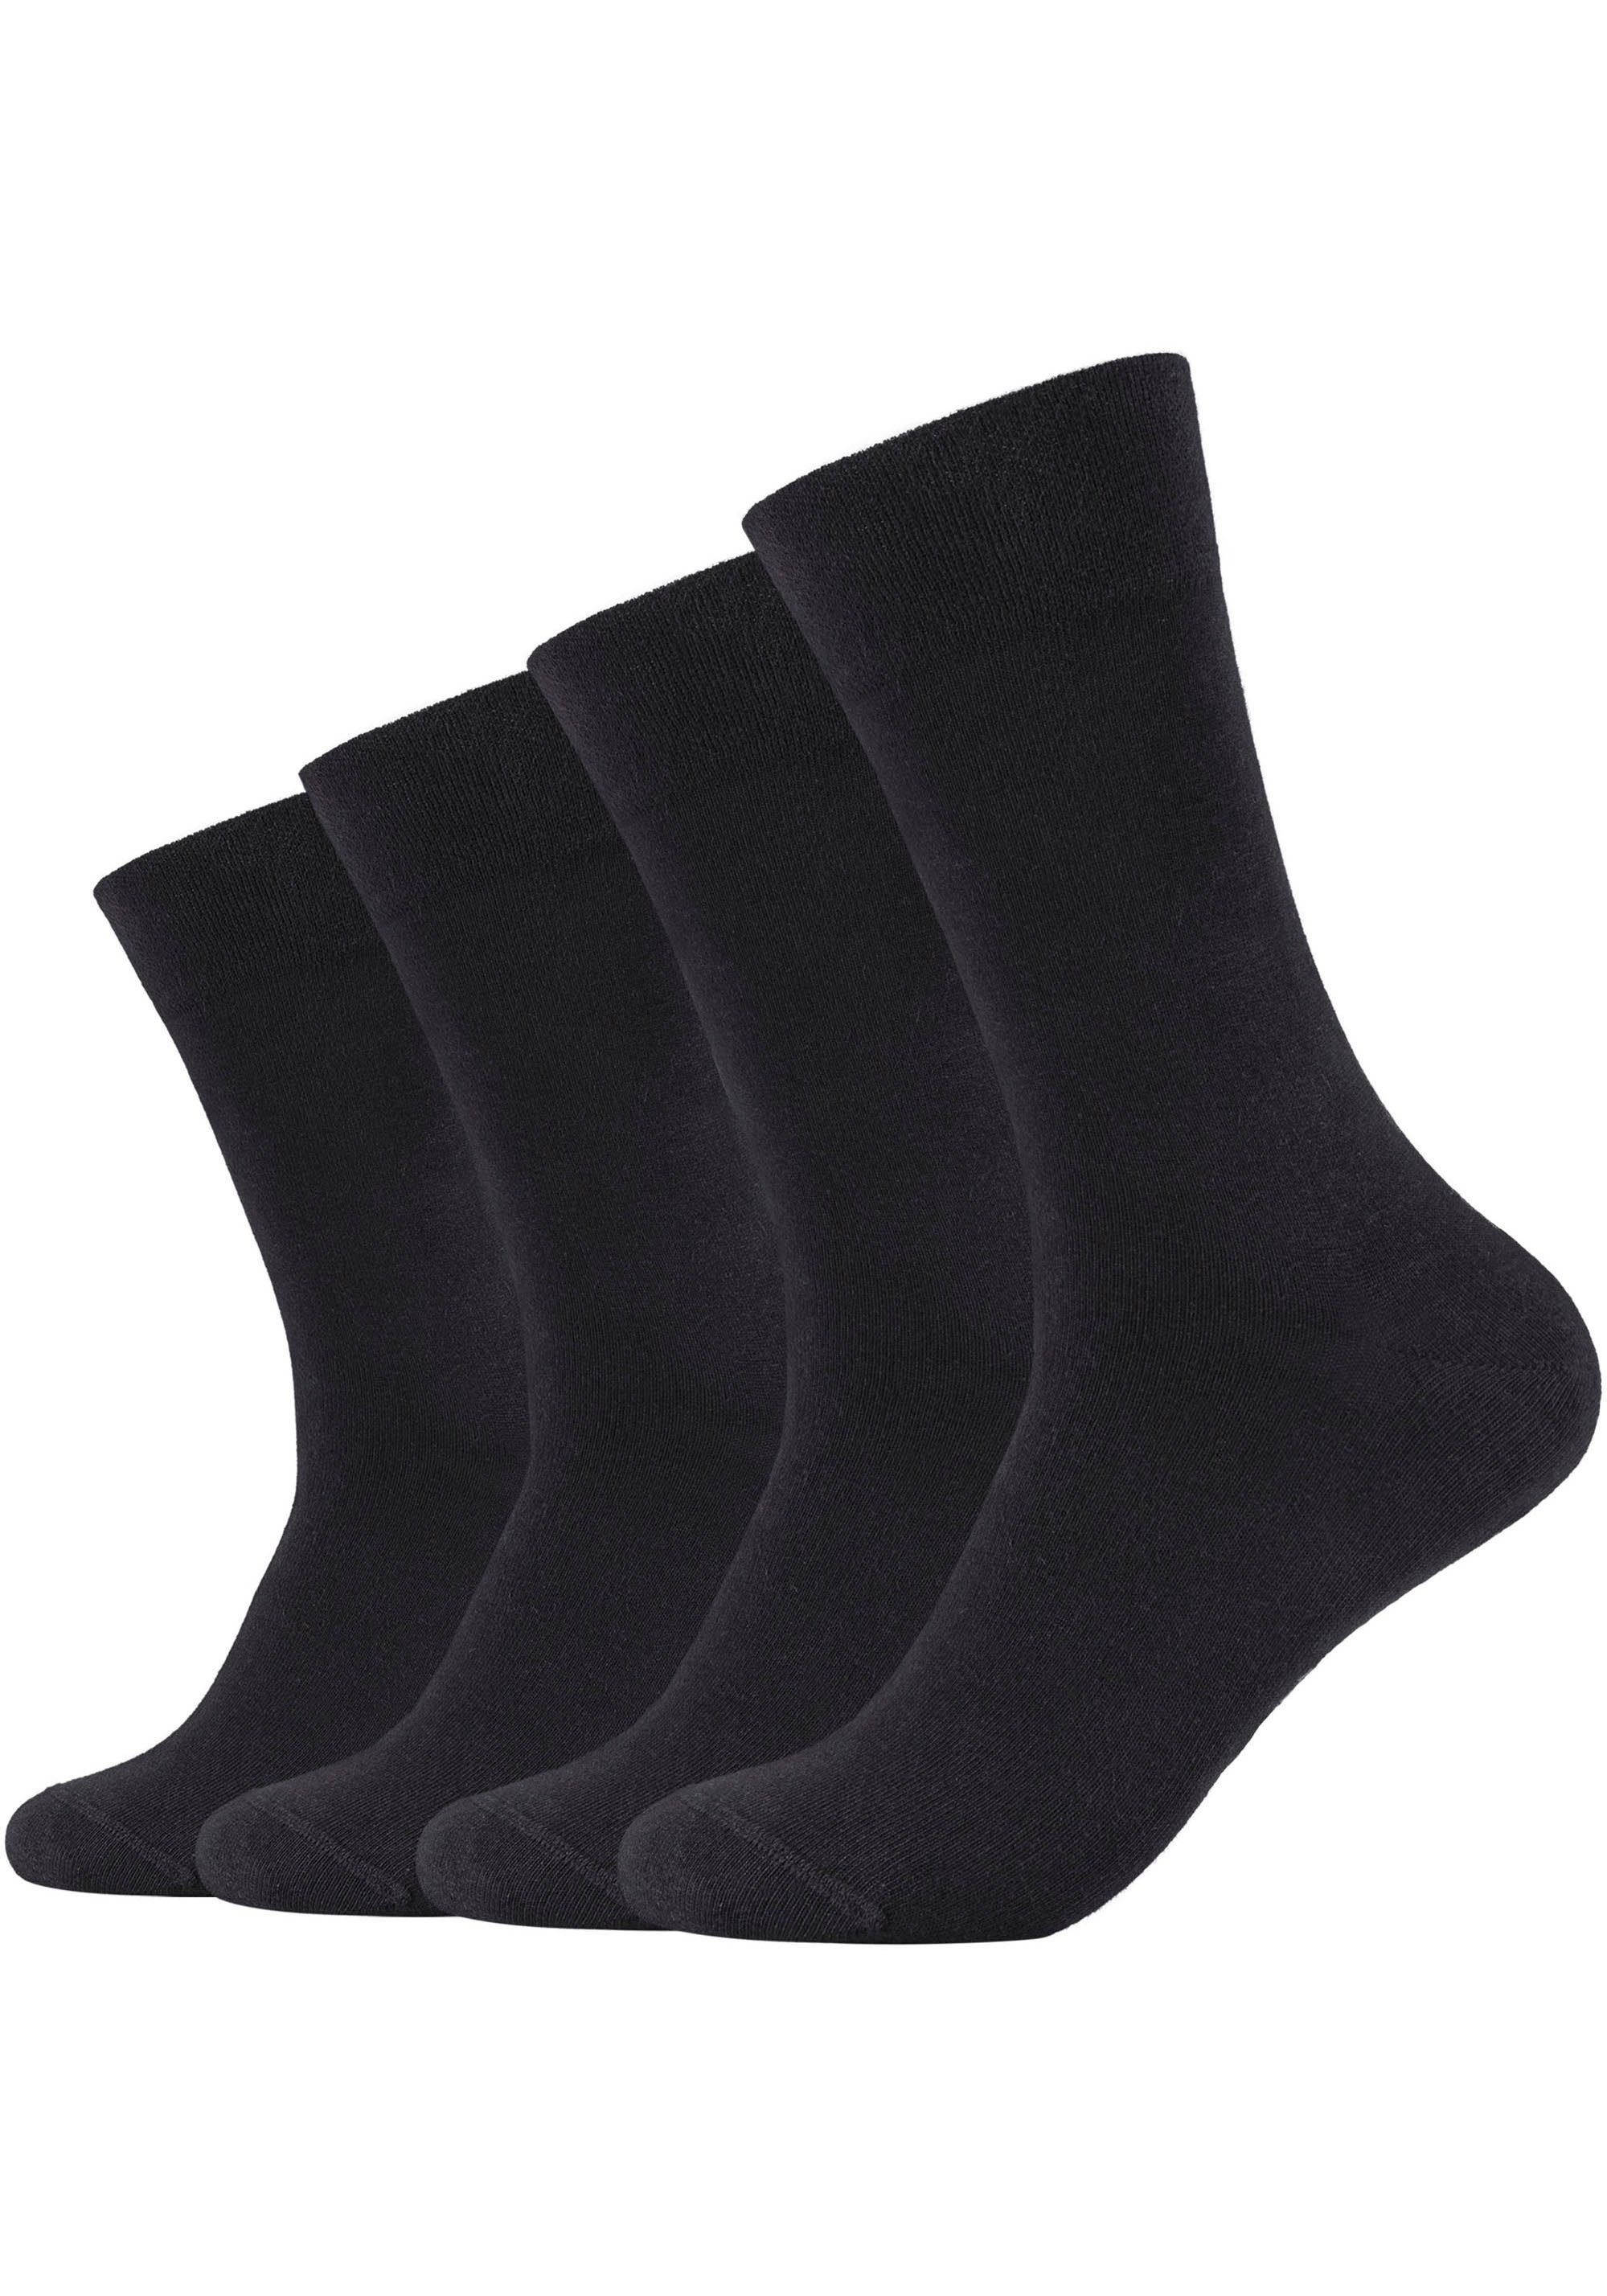 Camano Socken (Packung, 4-Paar) schwarz Bio-Baumwolle 97% Atmungsaktiv